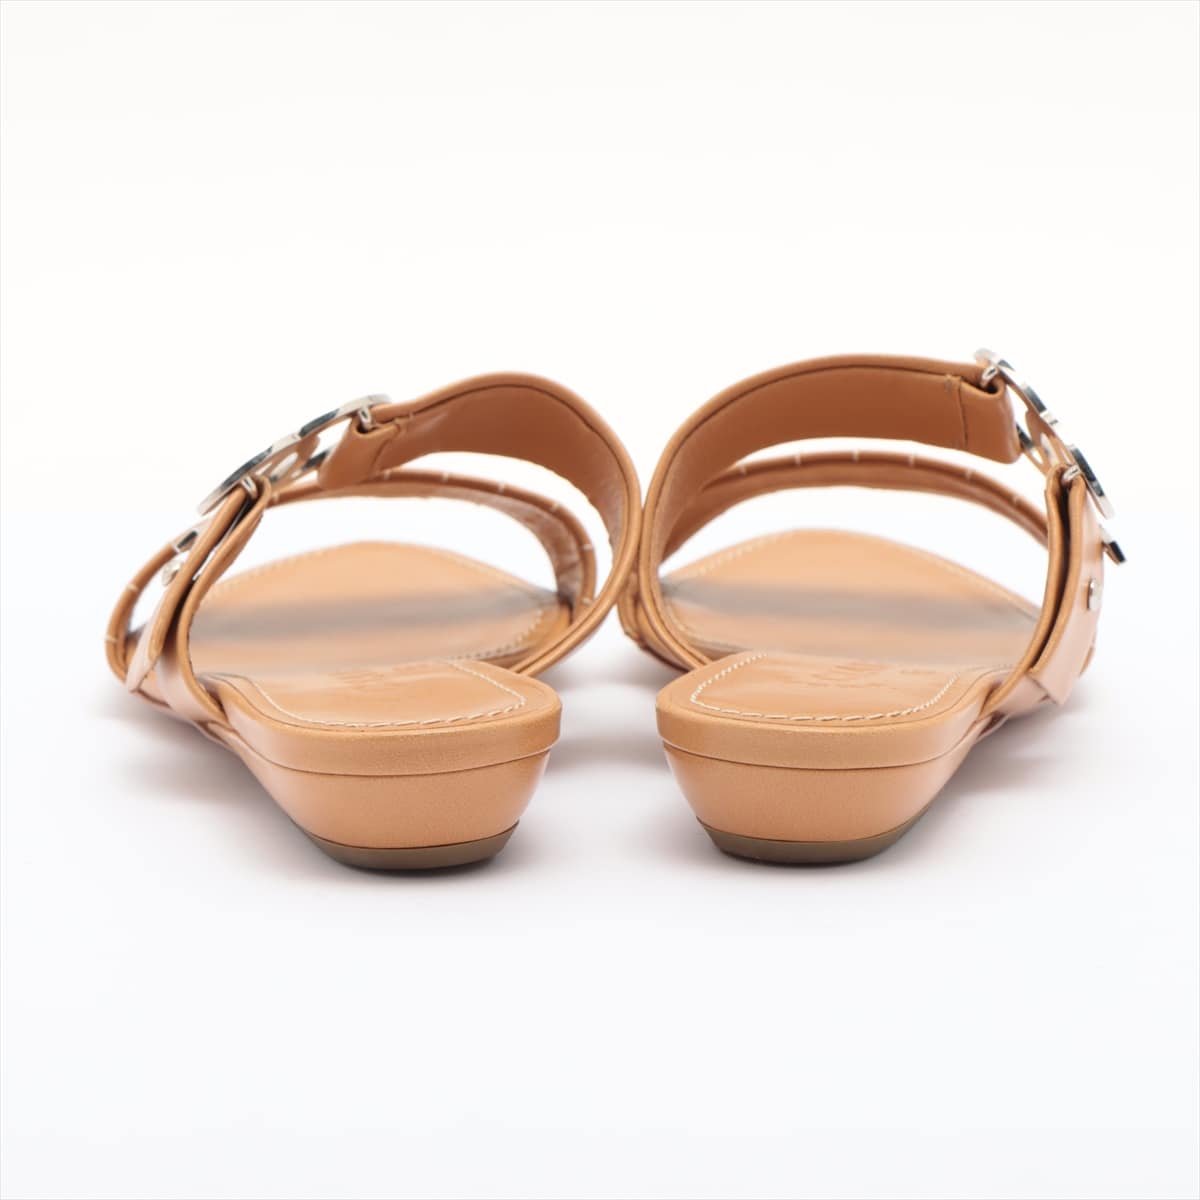 Chanel Coco Mark Leather Sandals 35 Ladies' Beige